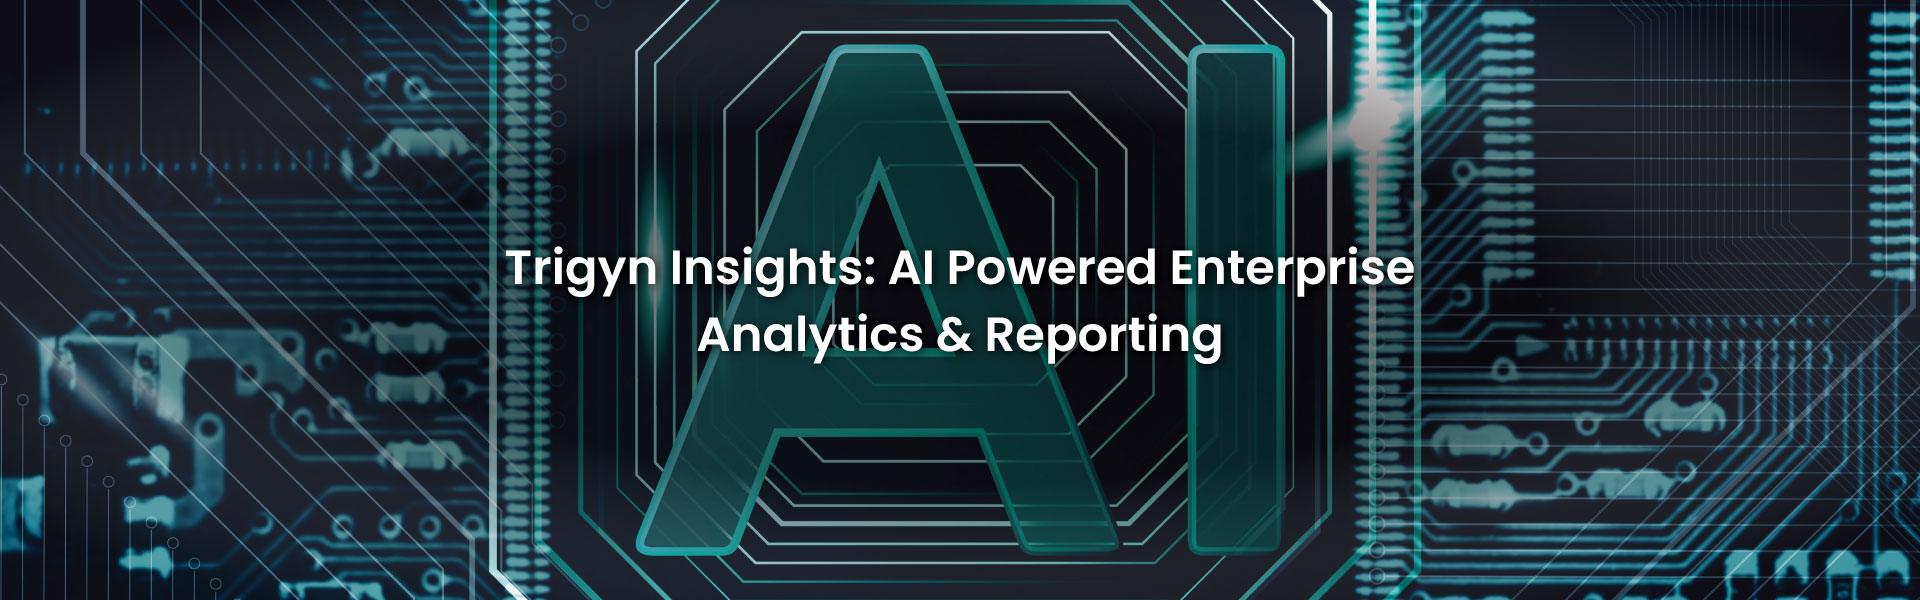 AI Powered Enterprise Analytics Case Study